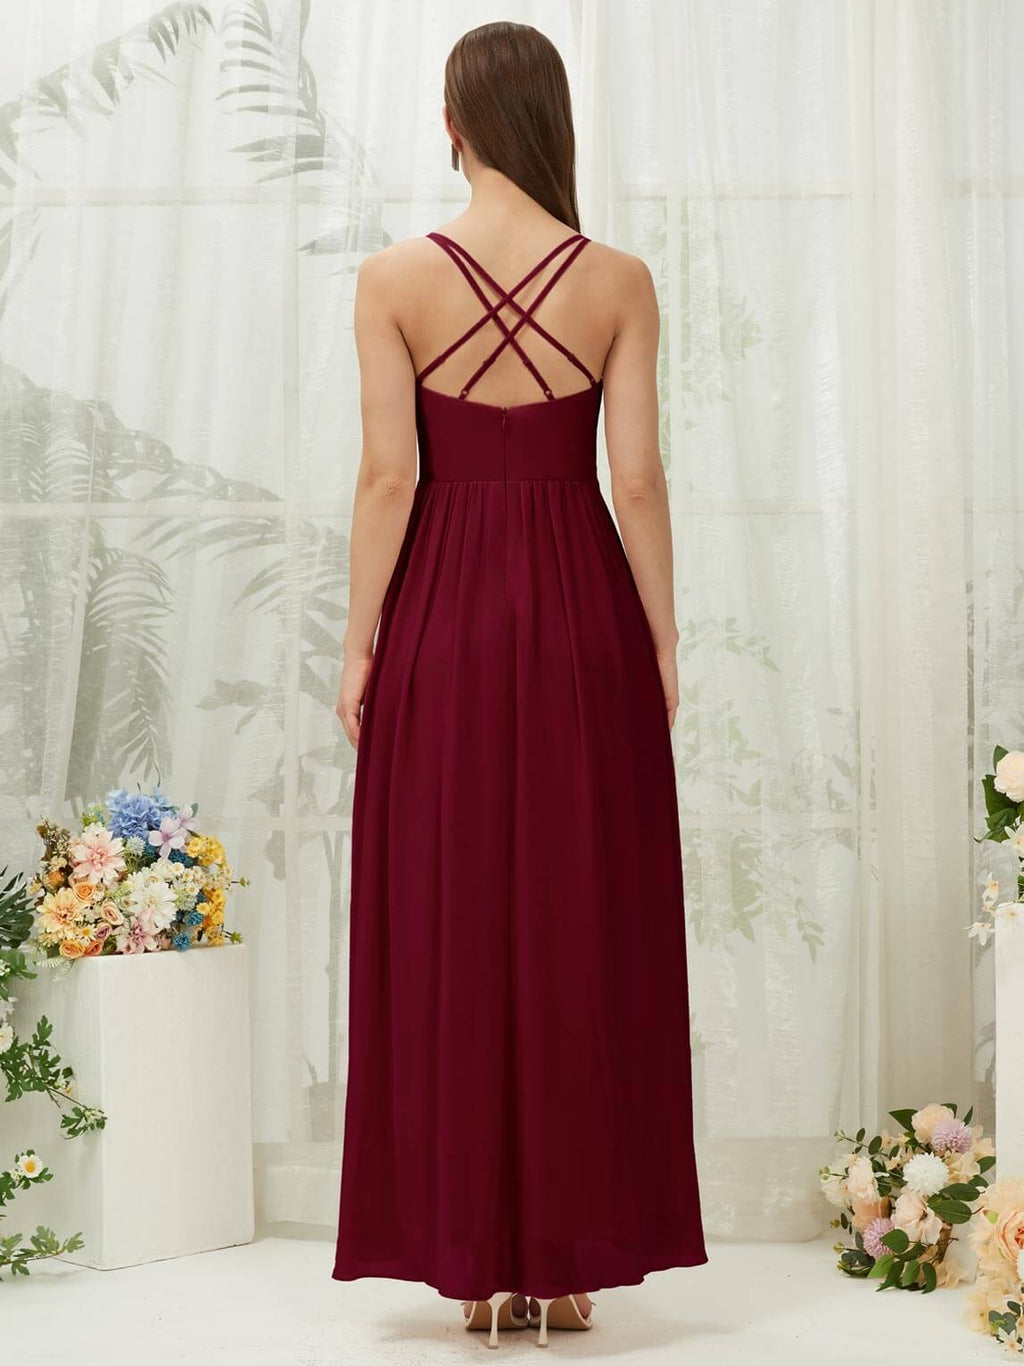 NZ Bridal Chiffon Burgundy Criscross Backless bridesmaid dresses 01691es Esme a